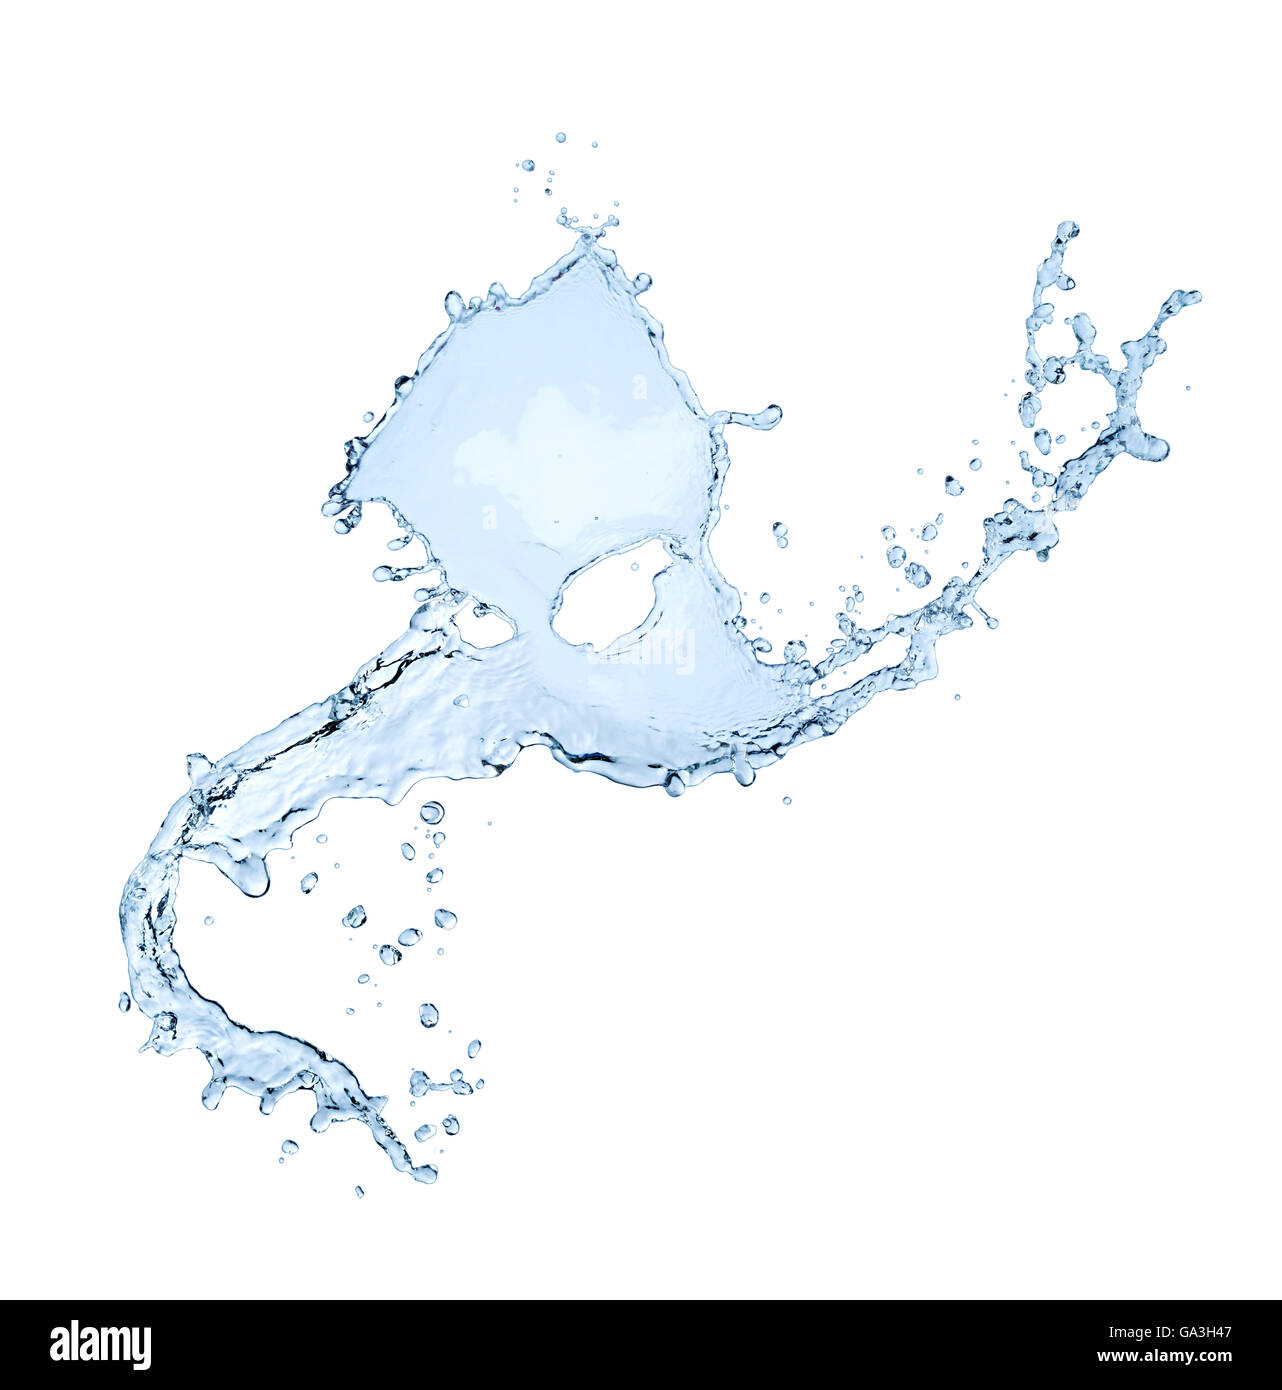 Acqua Splash isolati su sfondo bianco Foto Stock